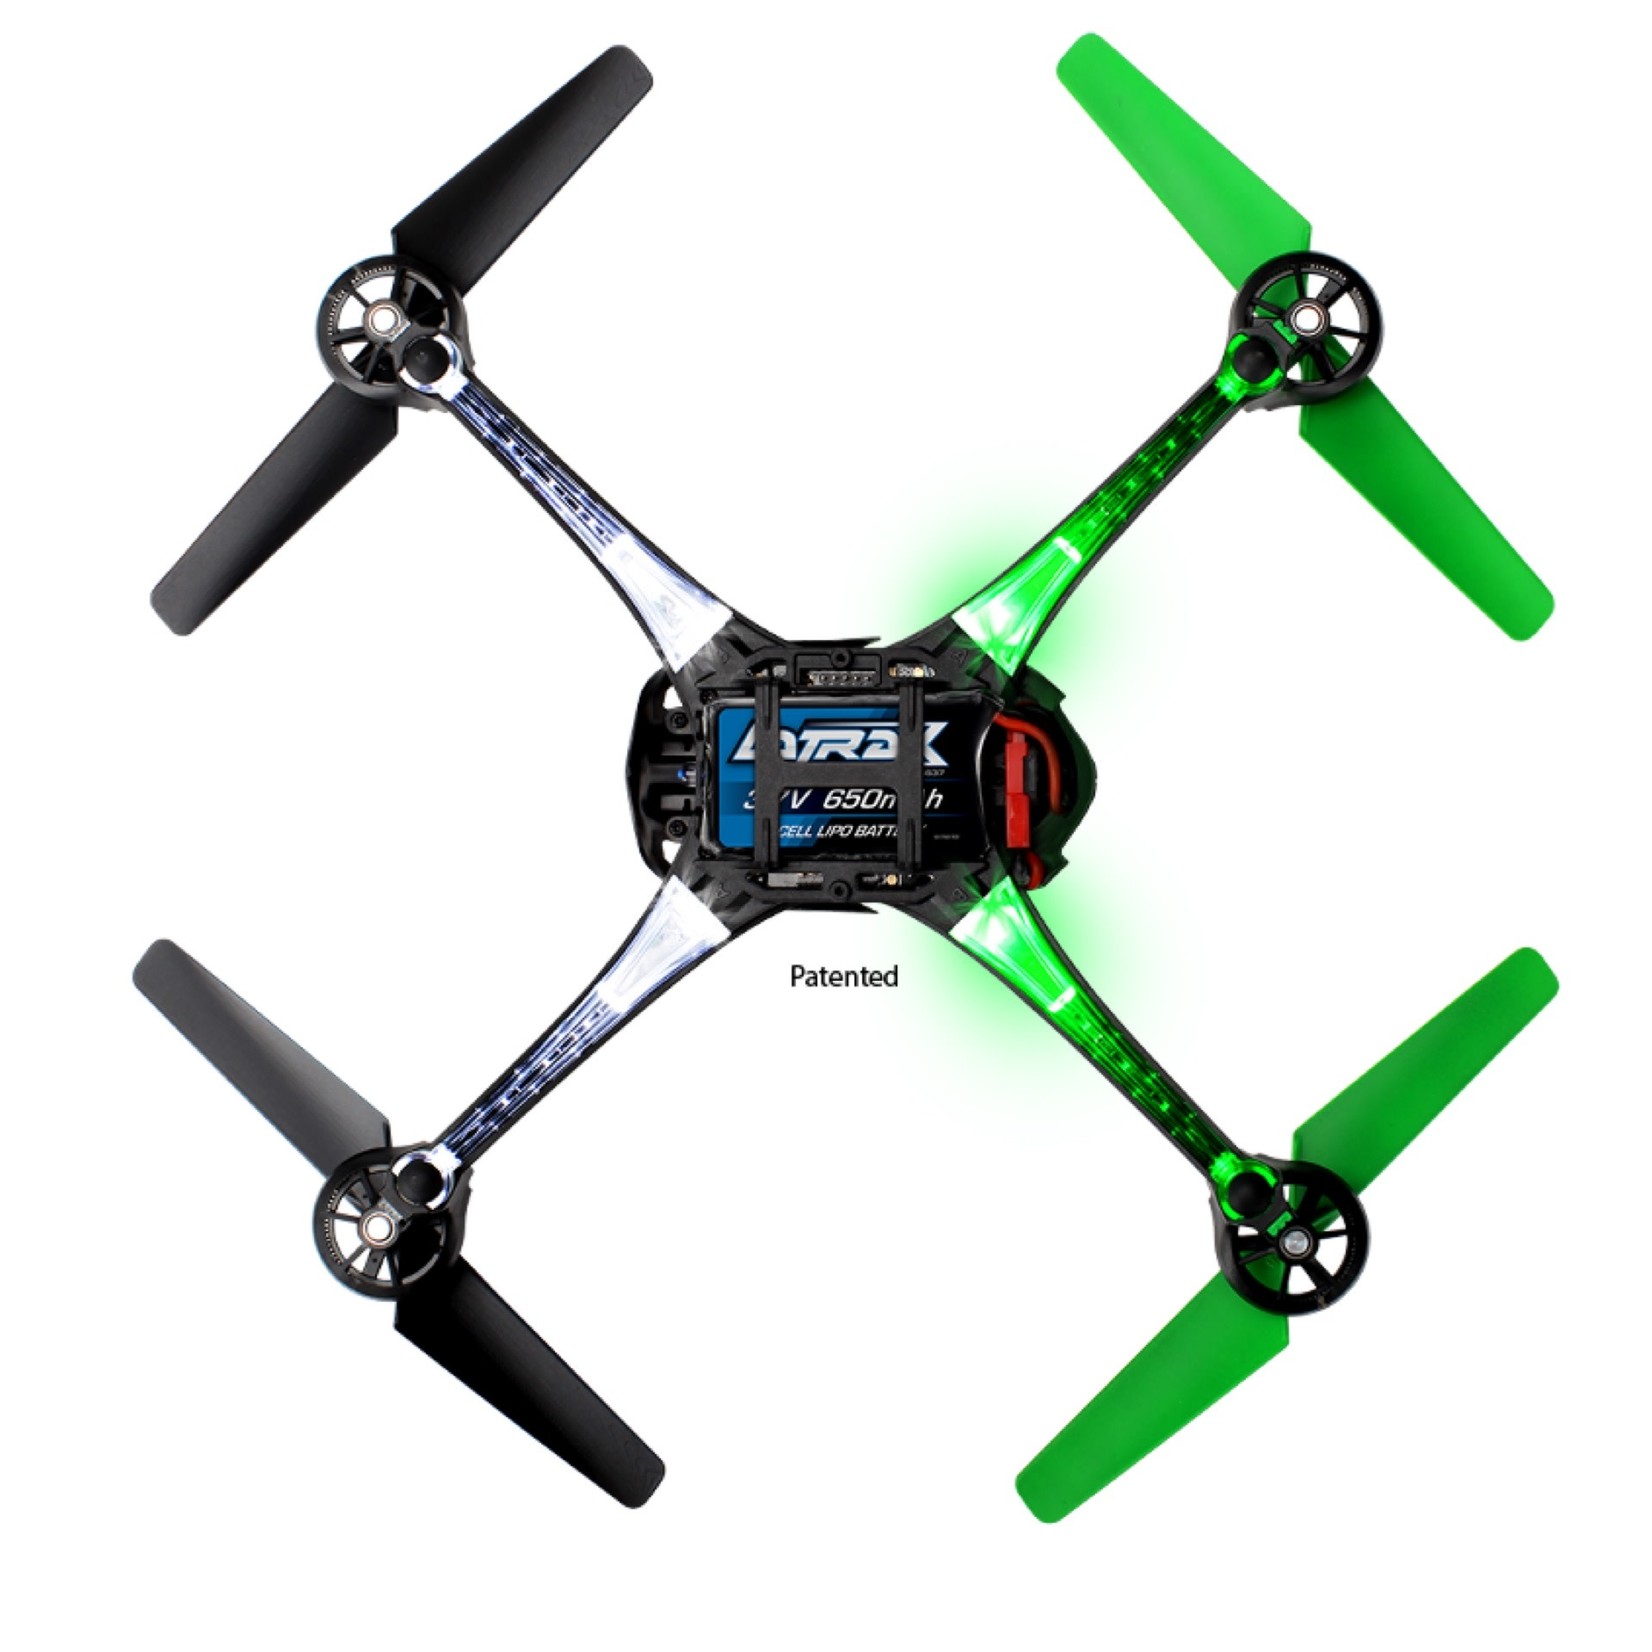 LaTrax Traxxas LaTrax Alias Ready-To-Fly Micro Electric Quadcopter Drone (Green) #6608-GRN